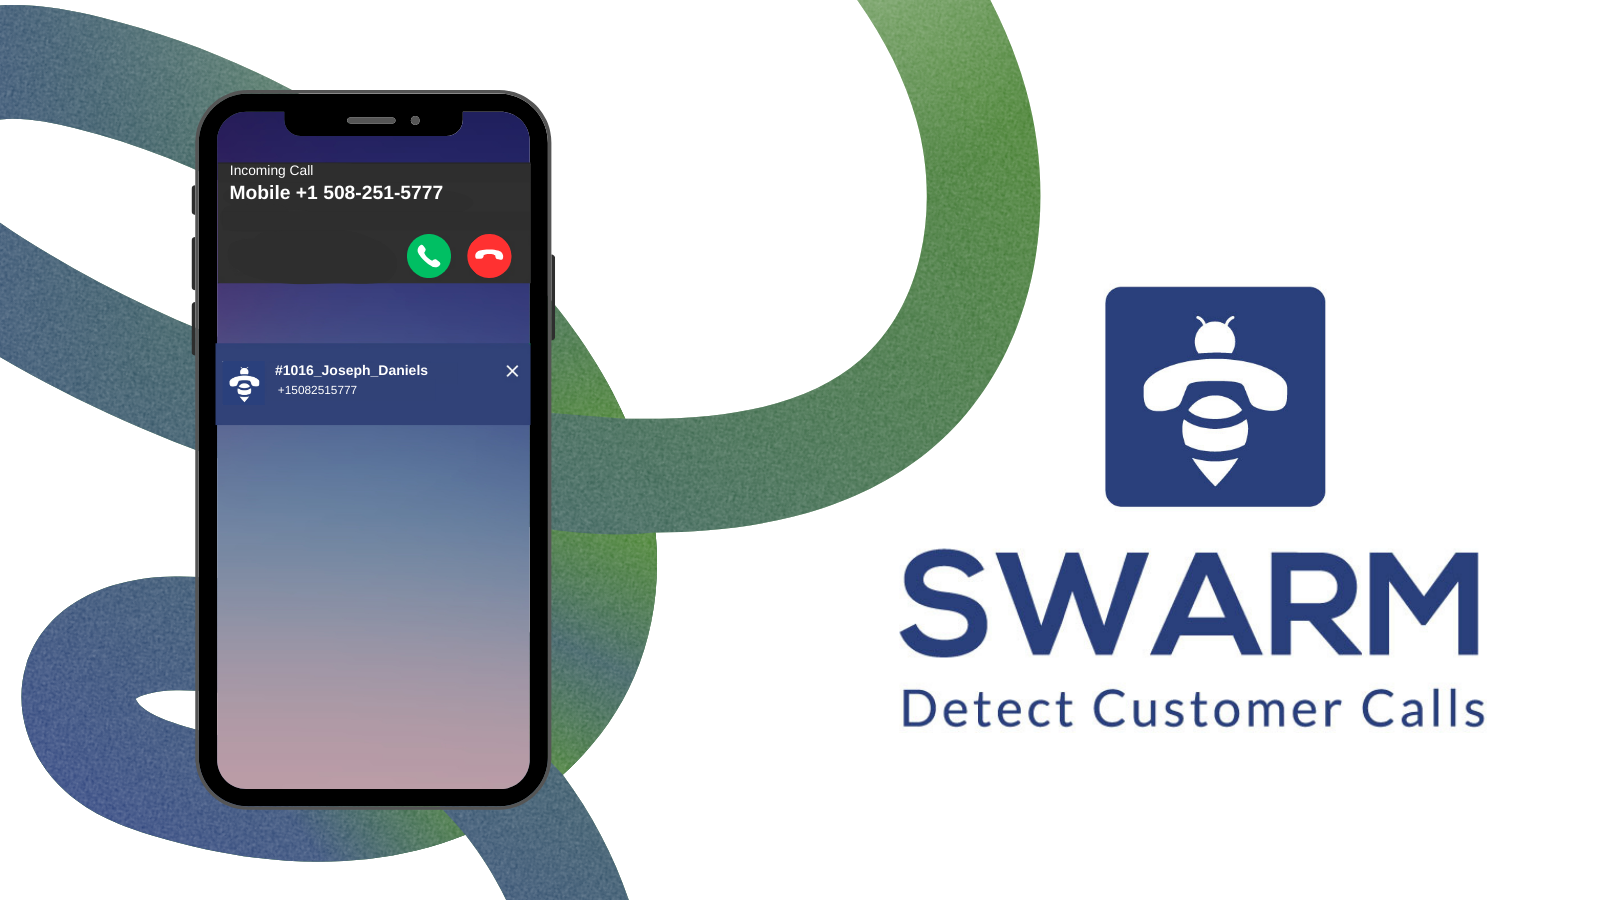 Swarm - Detect Customer Calls